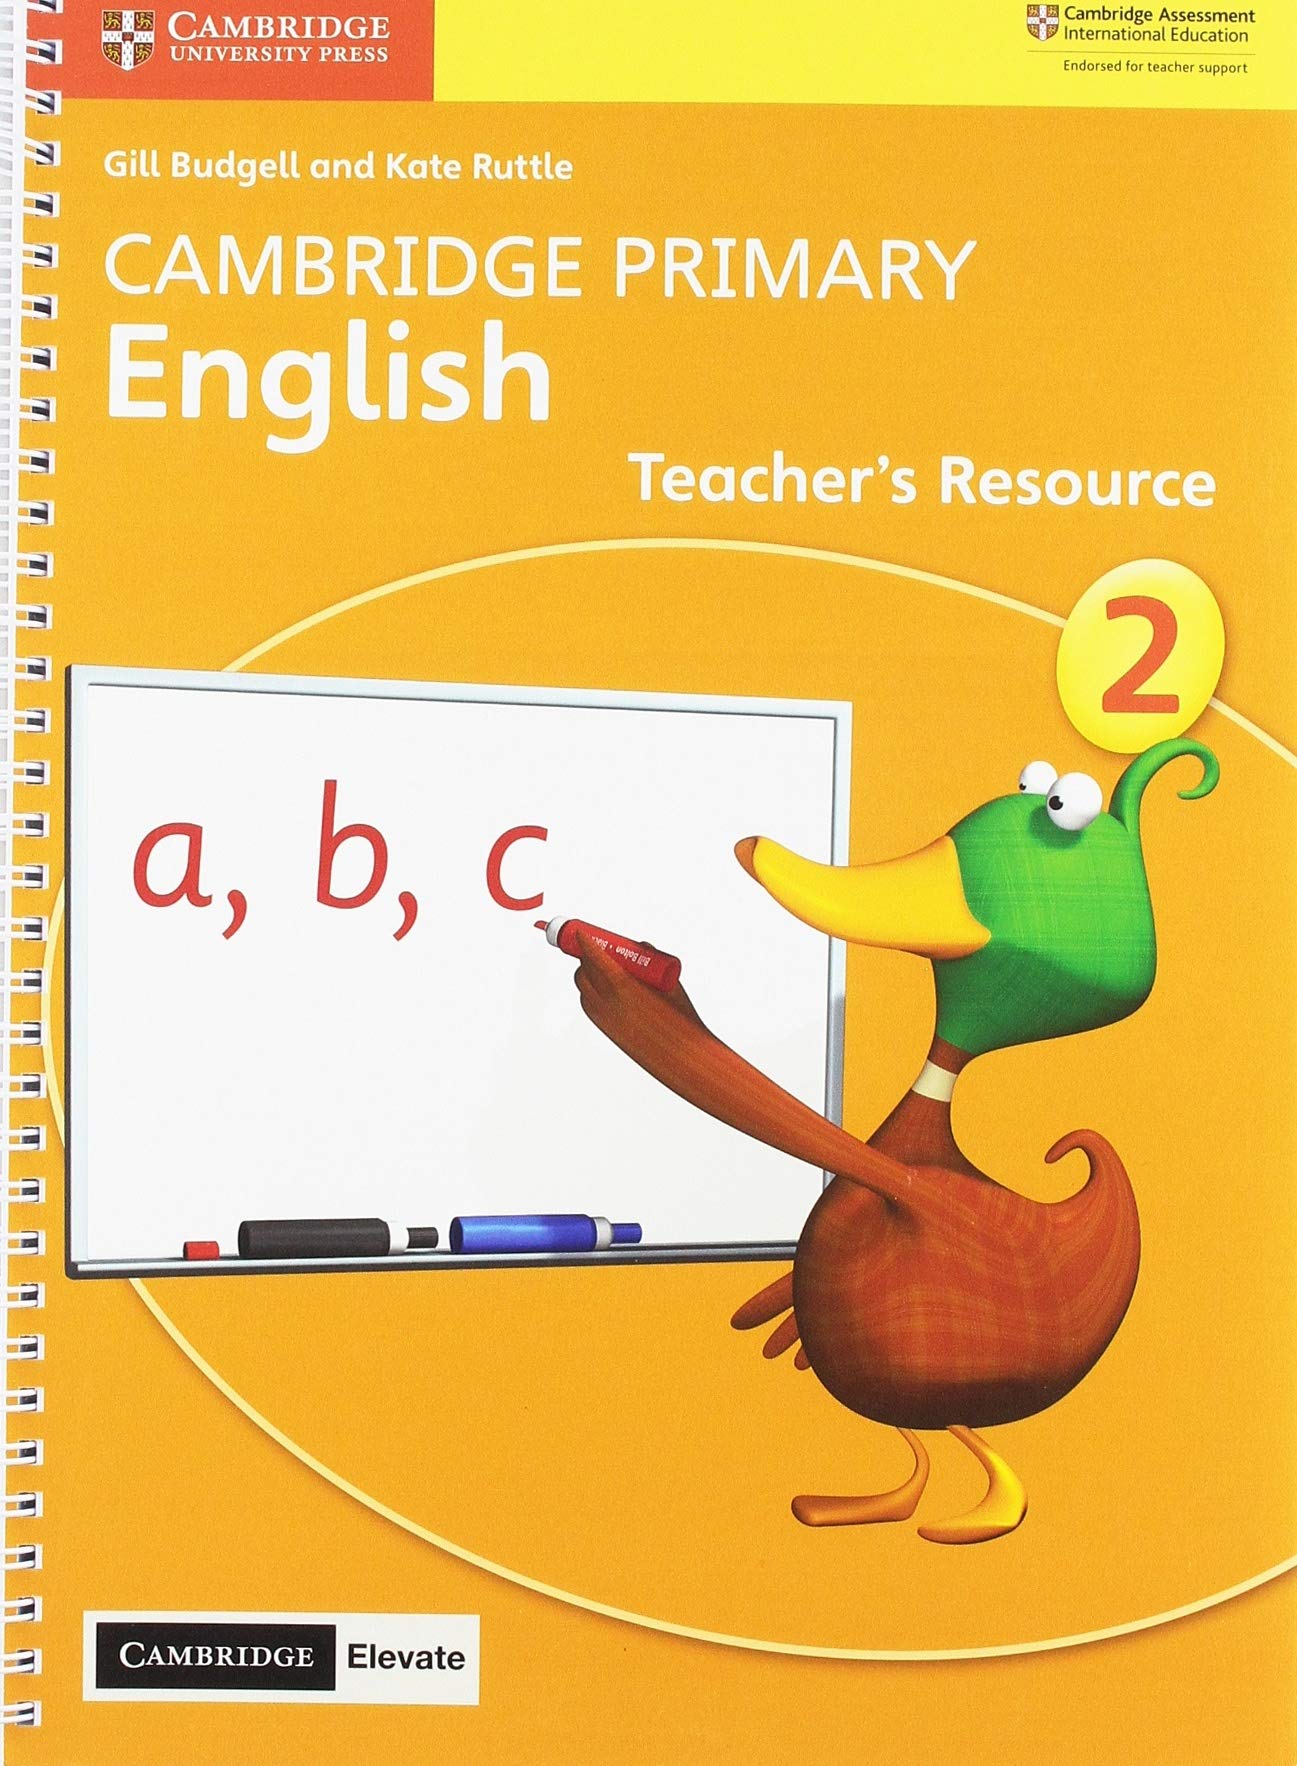 Https cambridge org. Cambridge Primary English. Cambridge Primary English 2. Cambridge Primary English 3. English for Primary teachers.